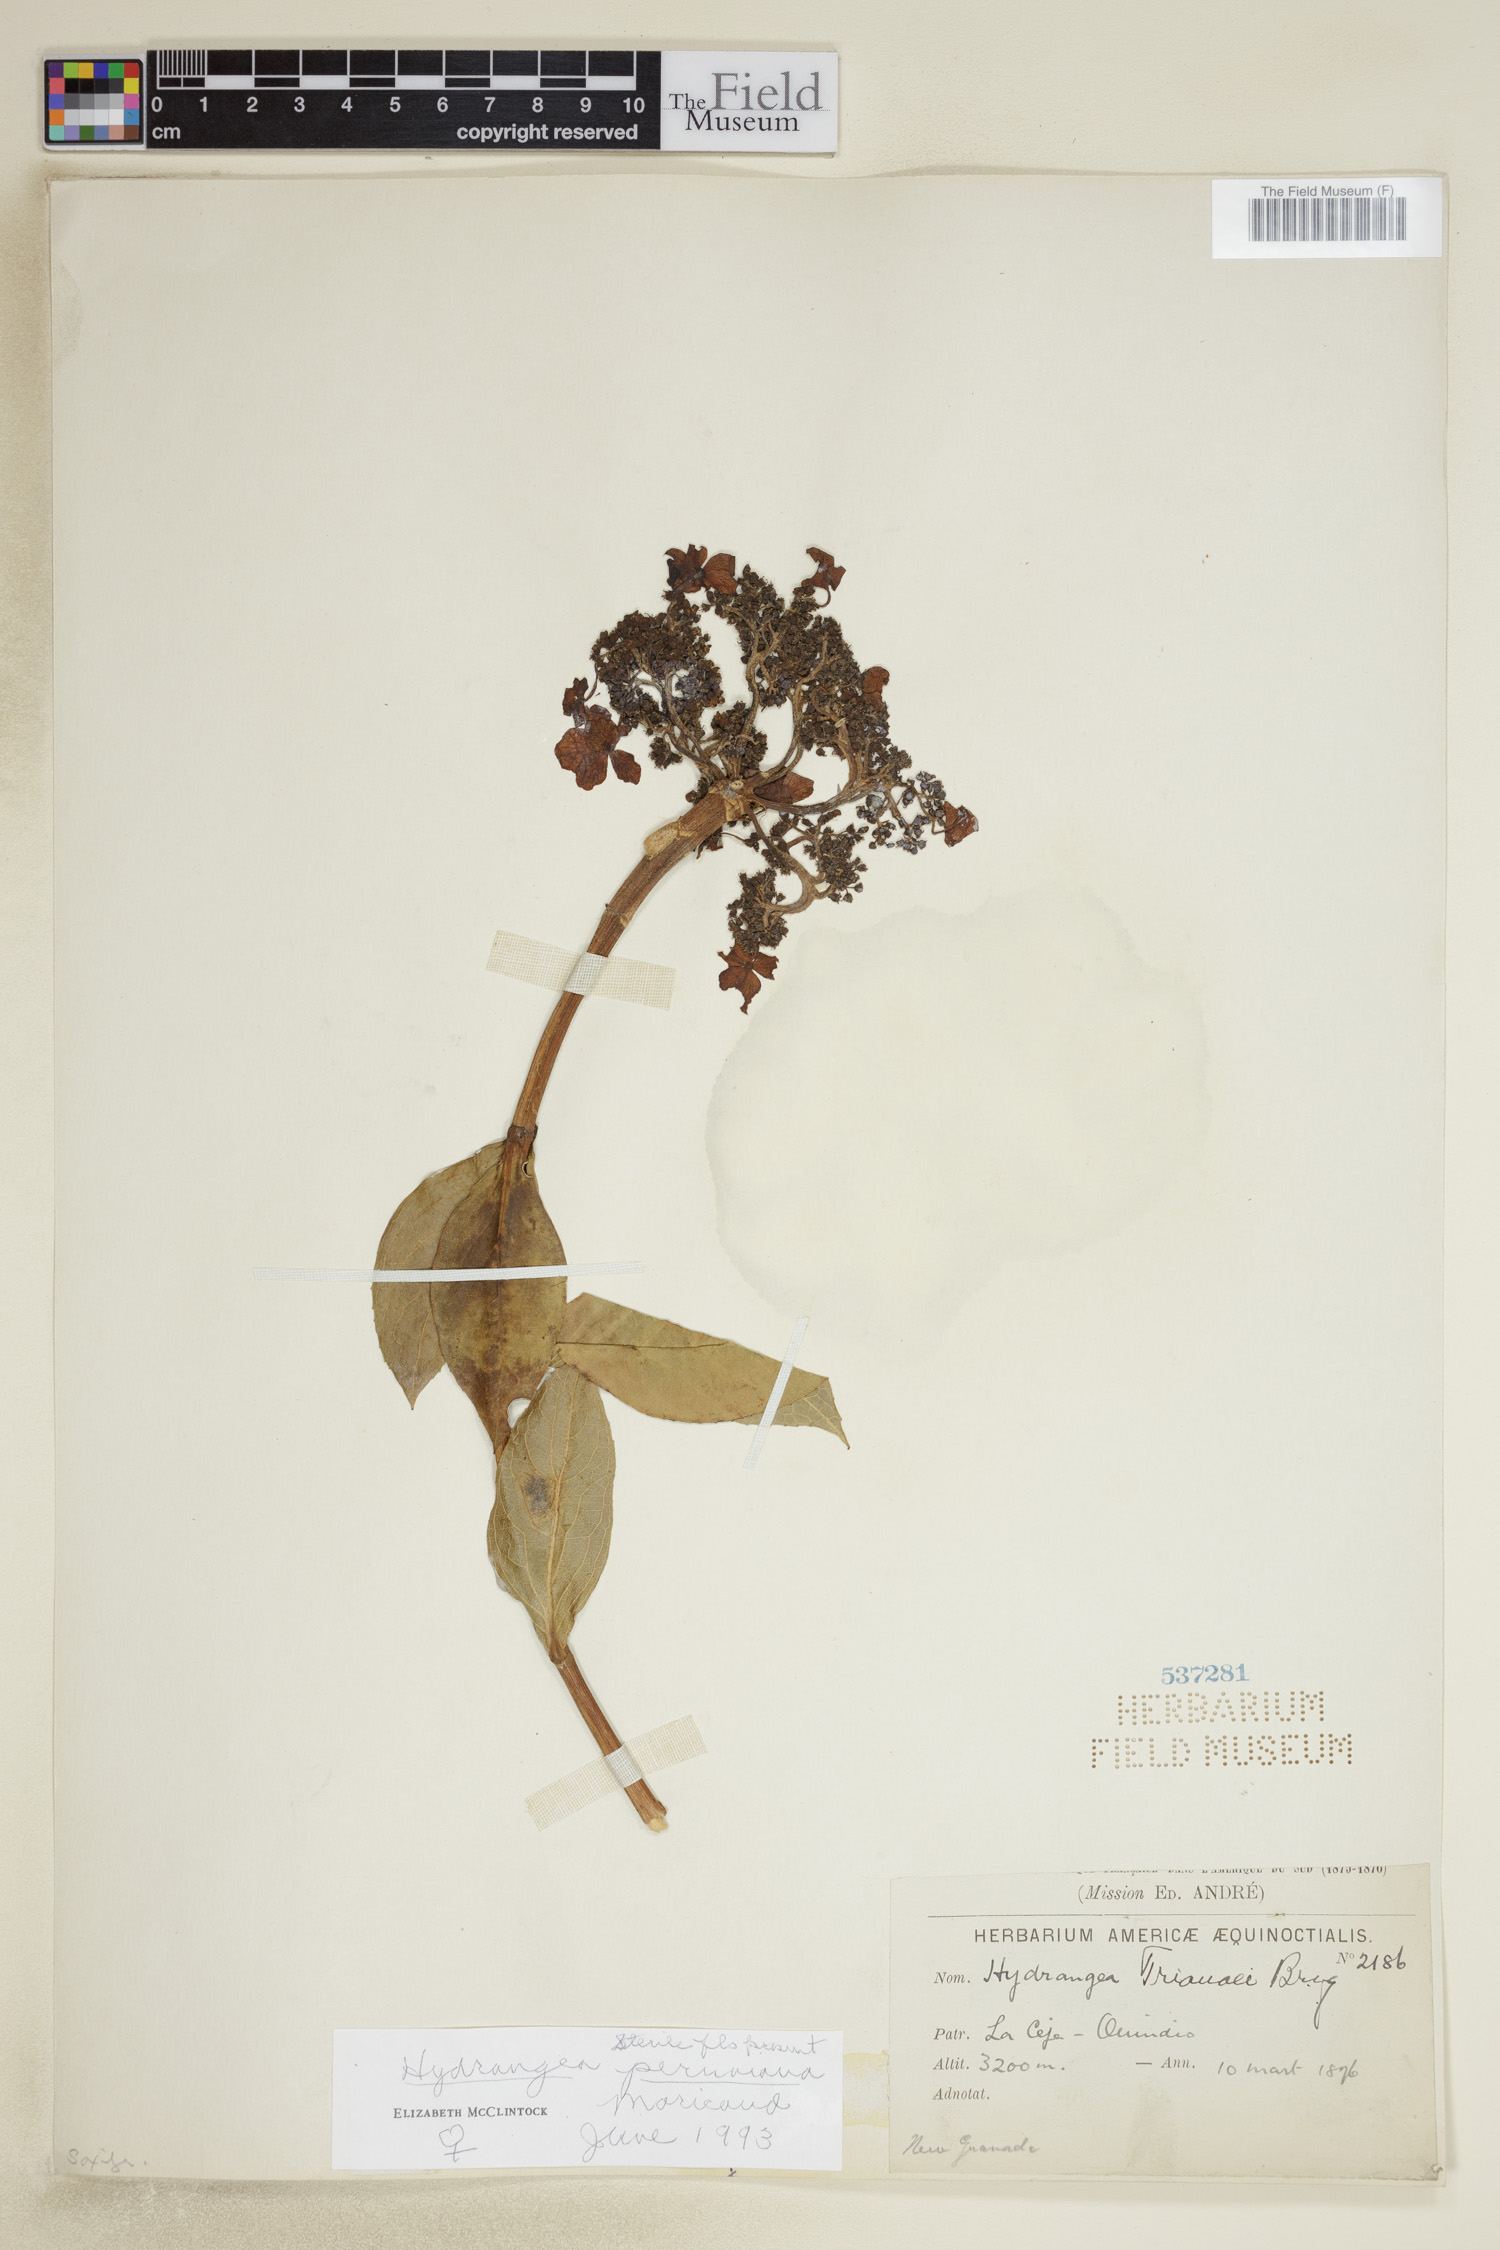 Hydrangea peruviana image